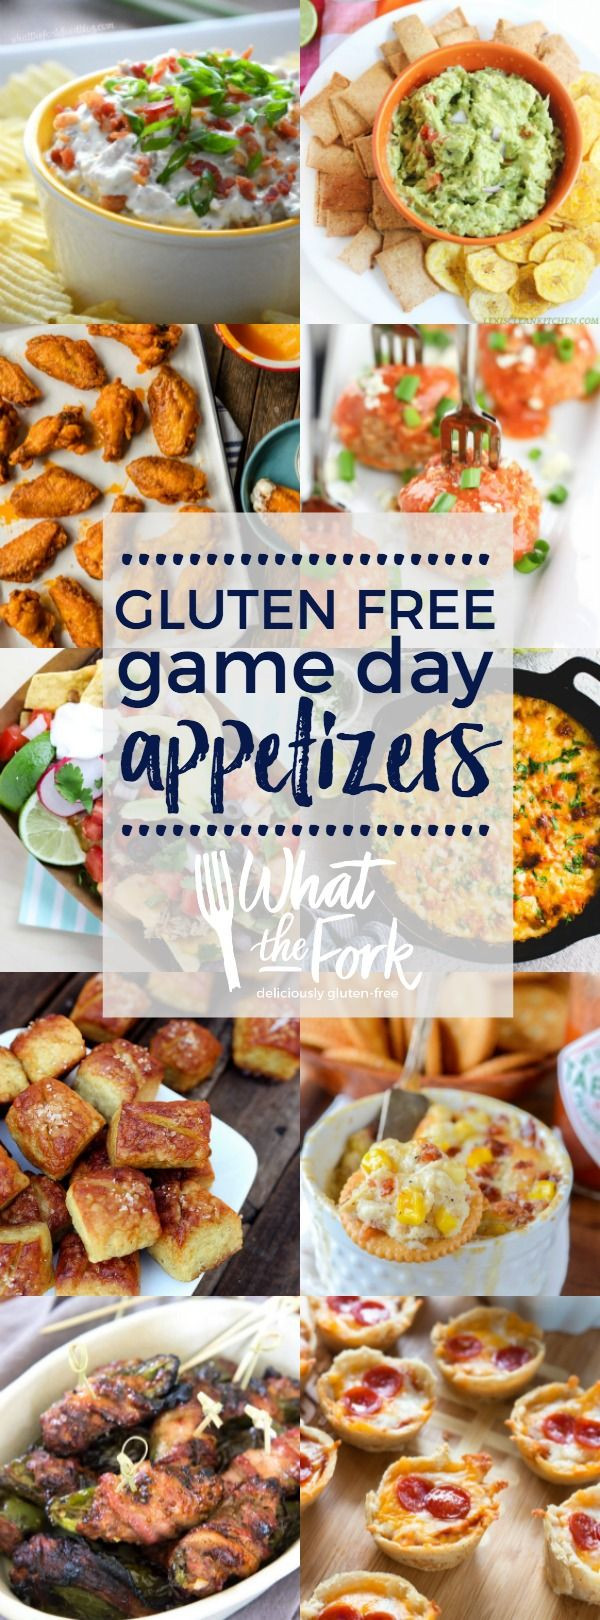 Gluten Free Party Food Ideas
 The 25 best Gluten free party food ideas on Pinterest